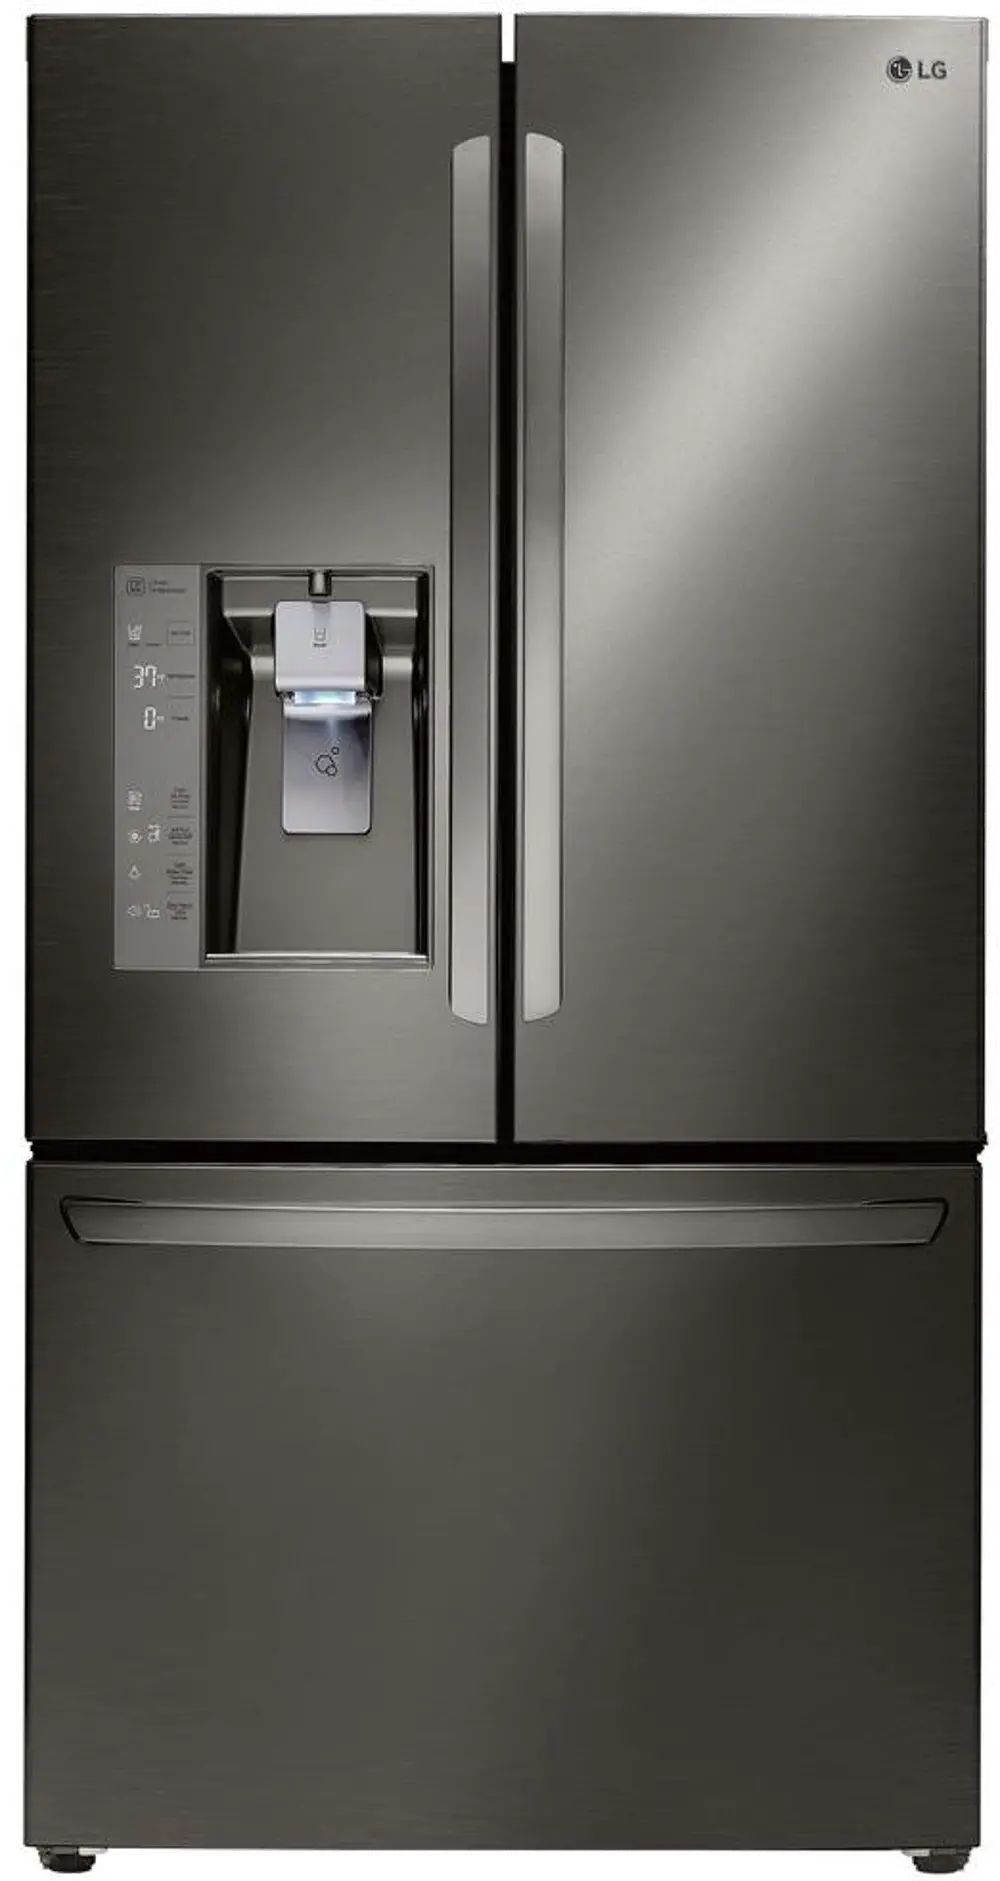 LFXC24726D LG Counter Depth French Door Refrigerator - 23.7 cu. ft., 36 Inch Black Stainless Steel-1